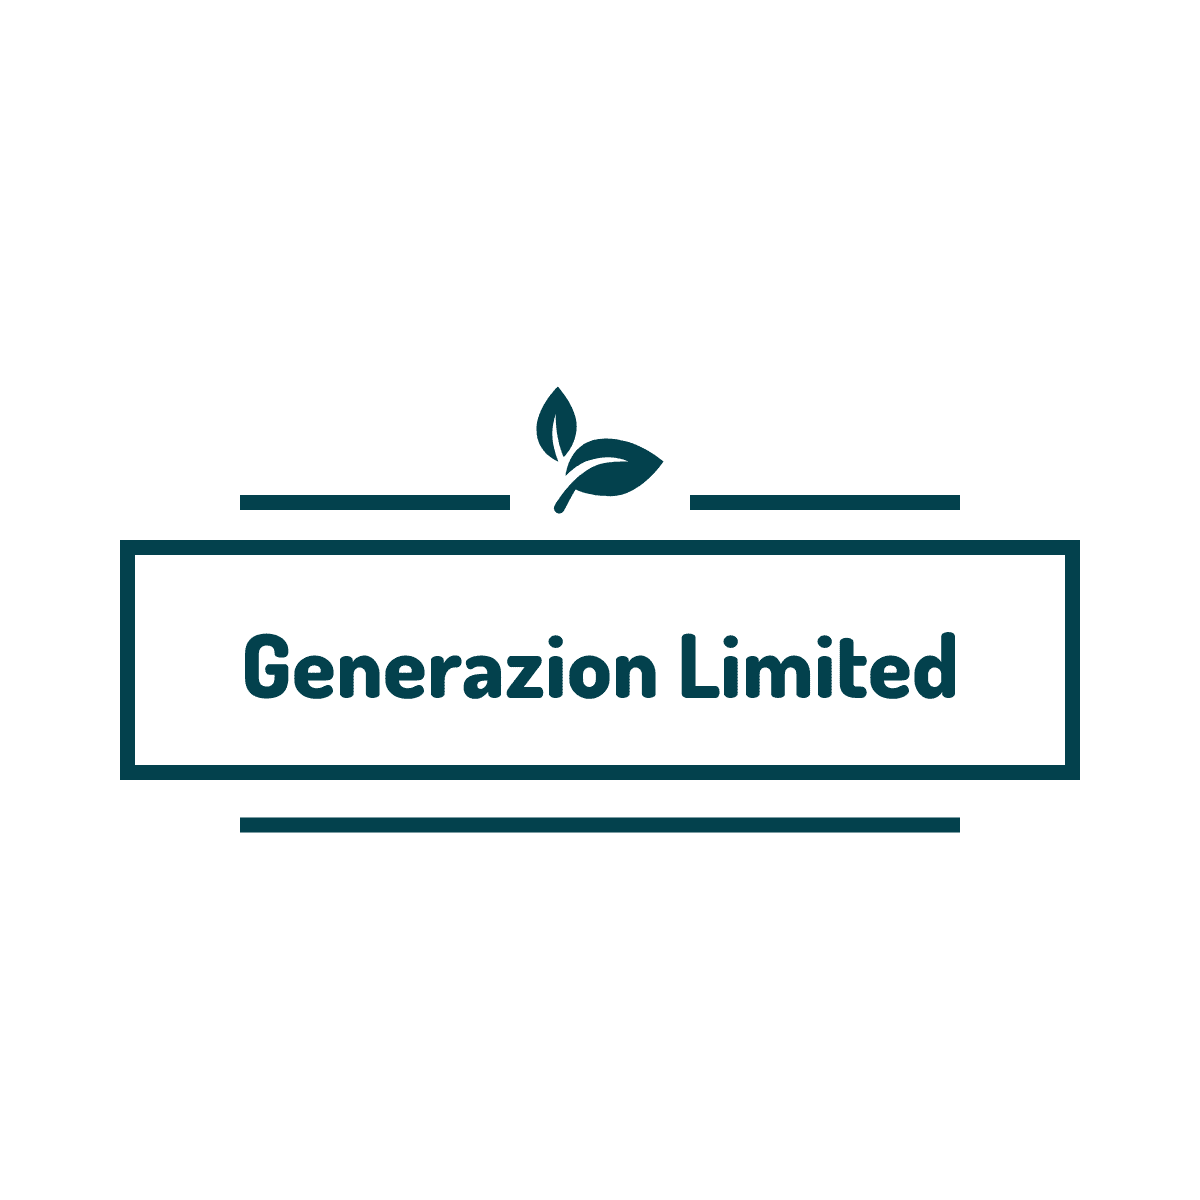 Generazion Limited